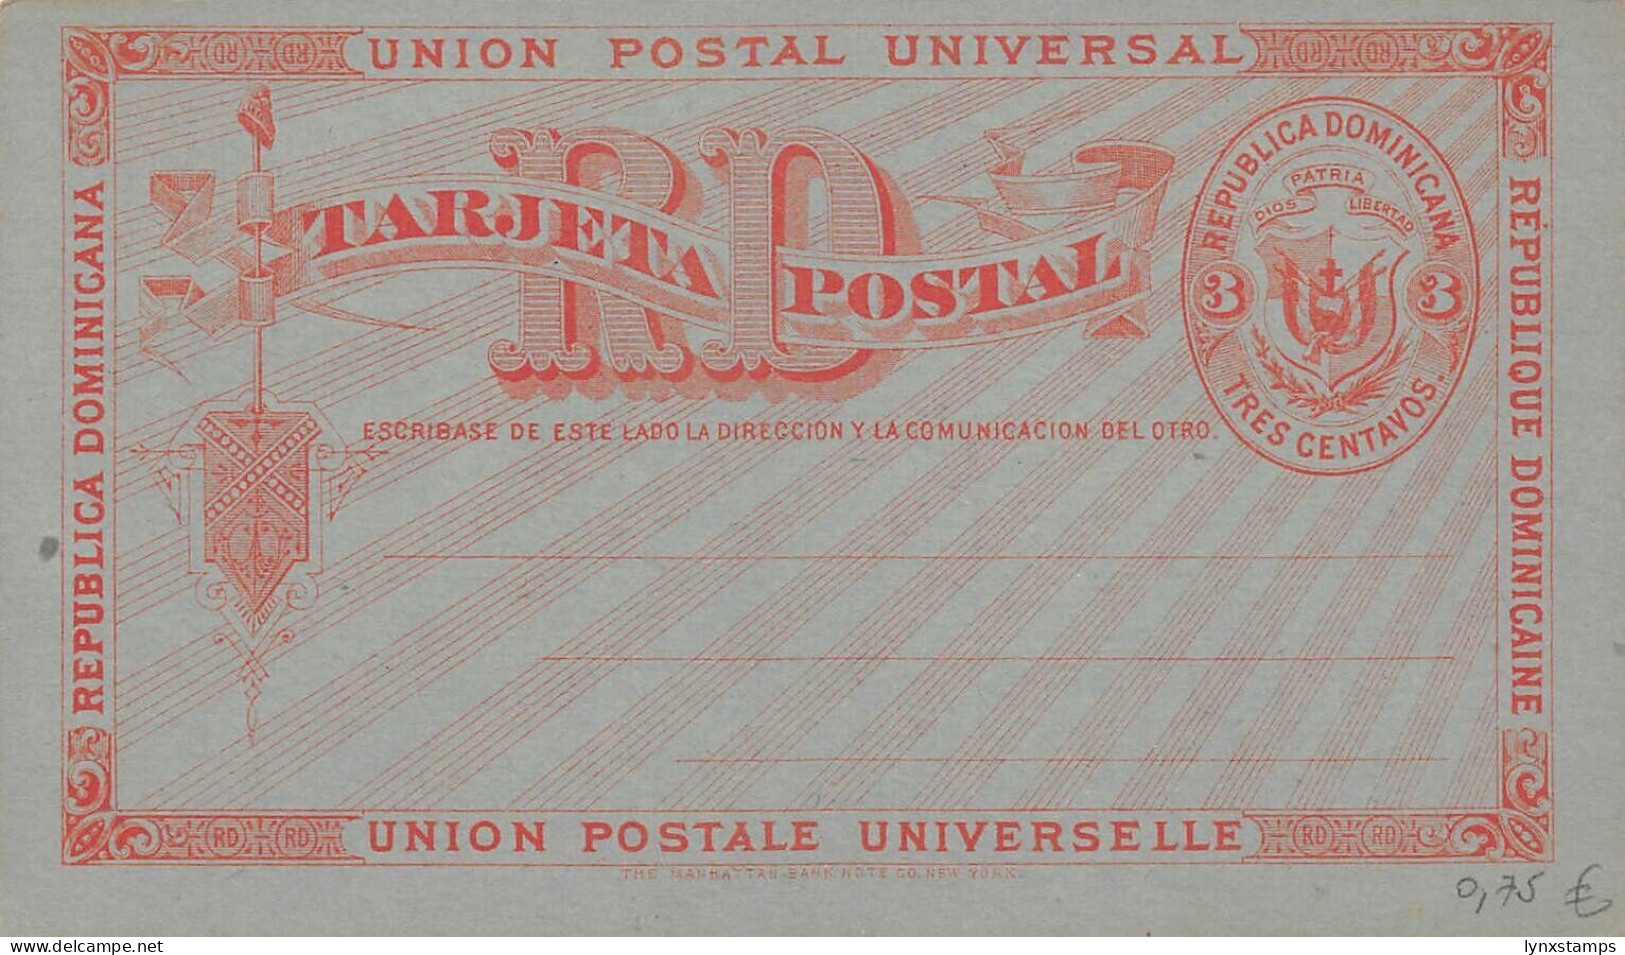 G021 Dominican R., Unused Postal Stationery 3 Centavos - Dominikanische Rep.